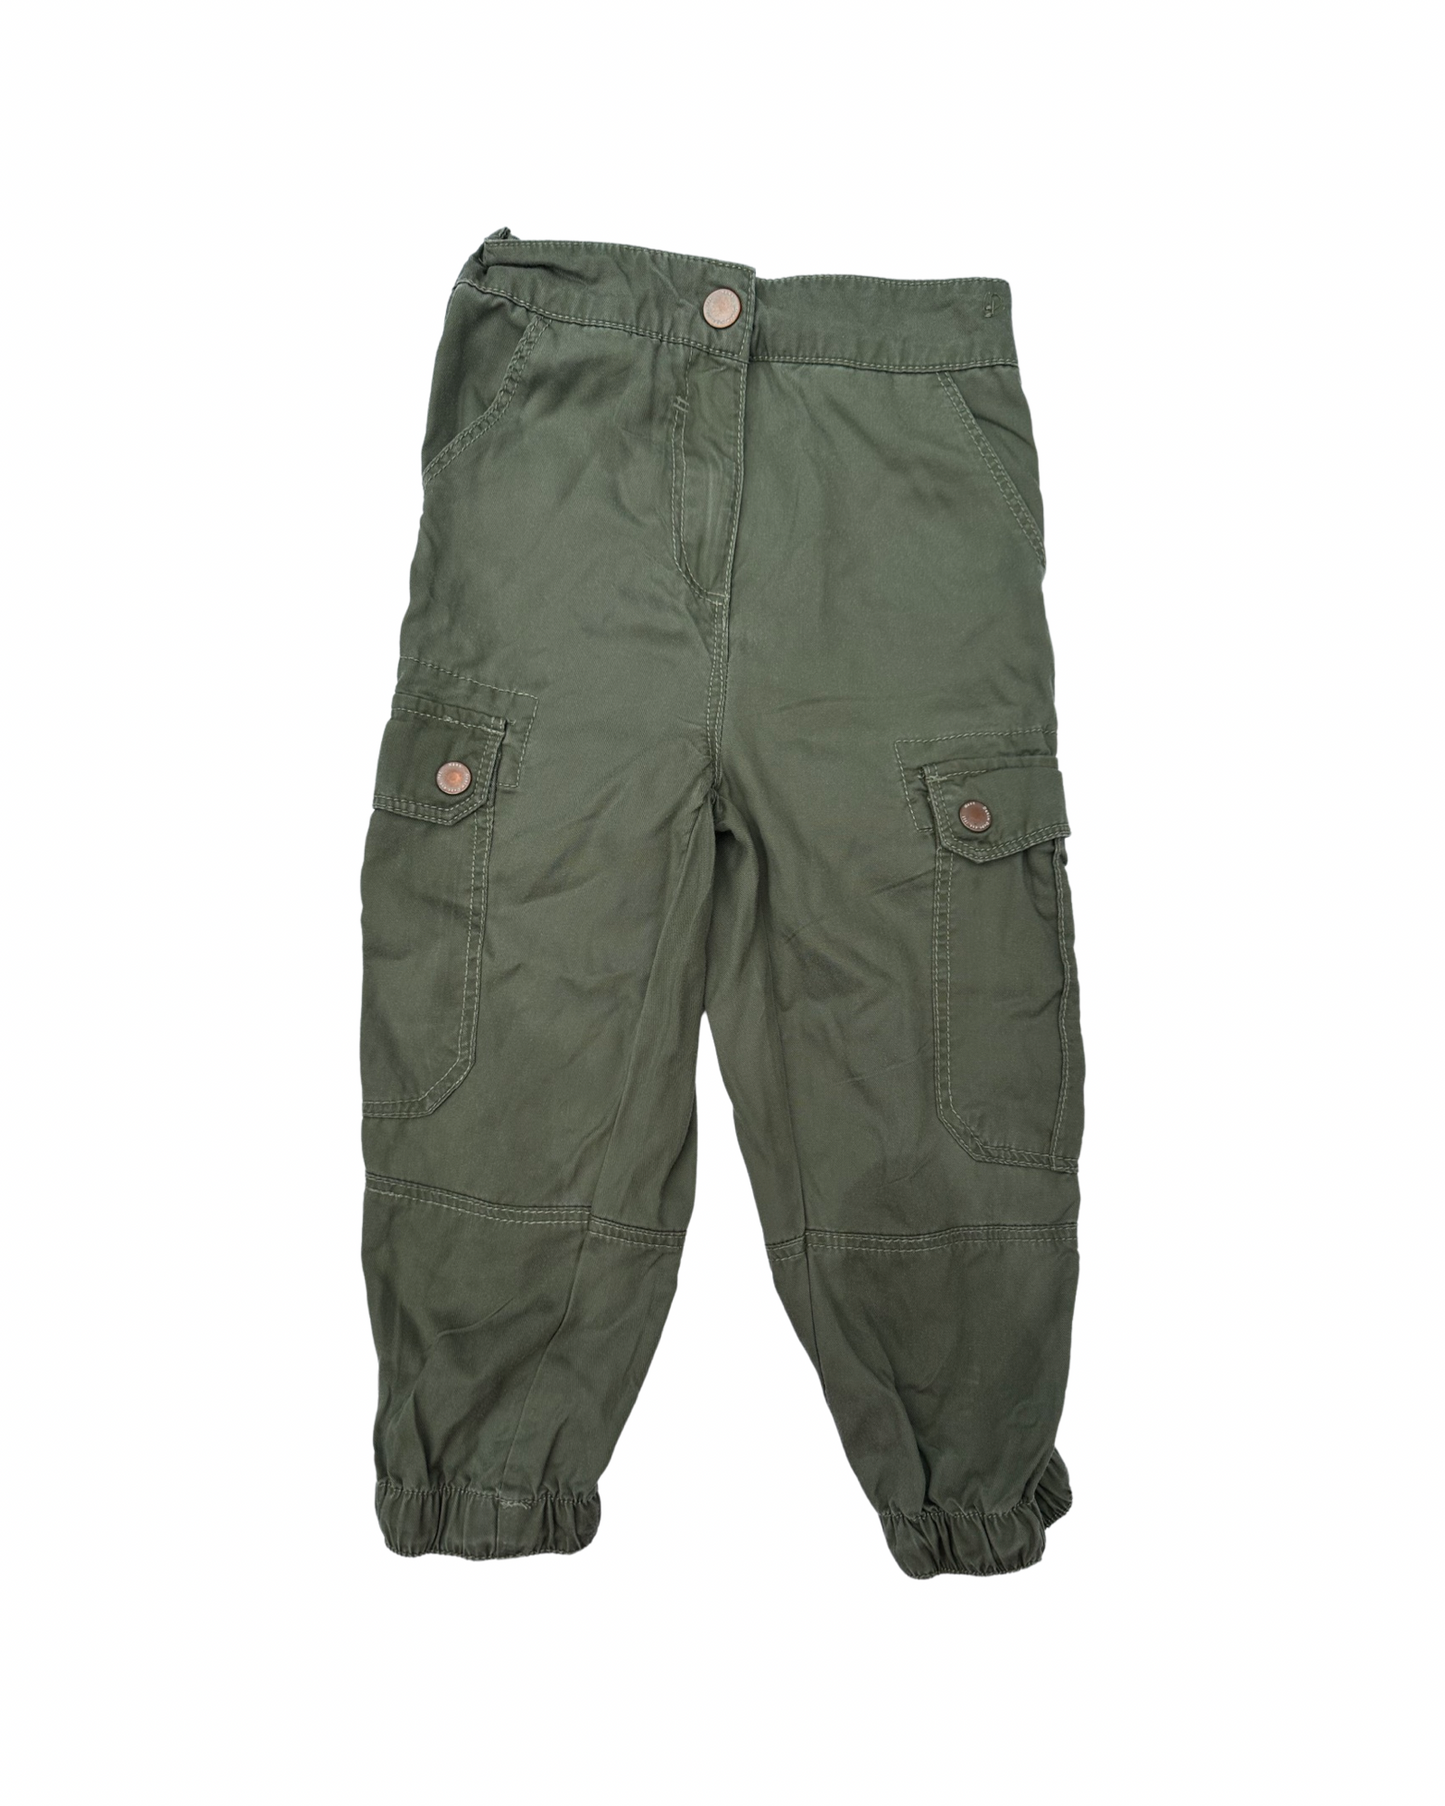 M&S khaki light cargo trousers (size 3-4yrs)